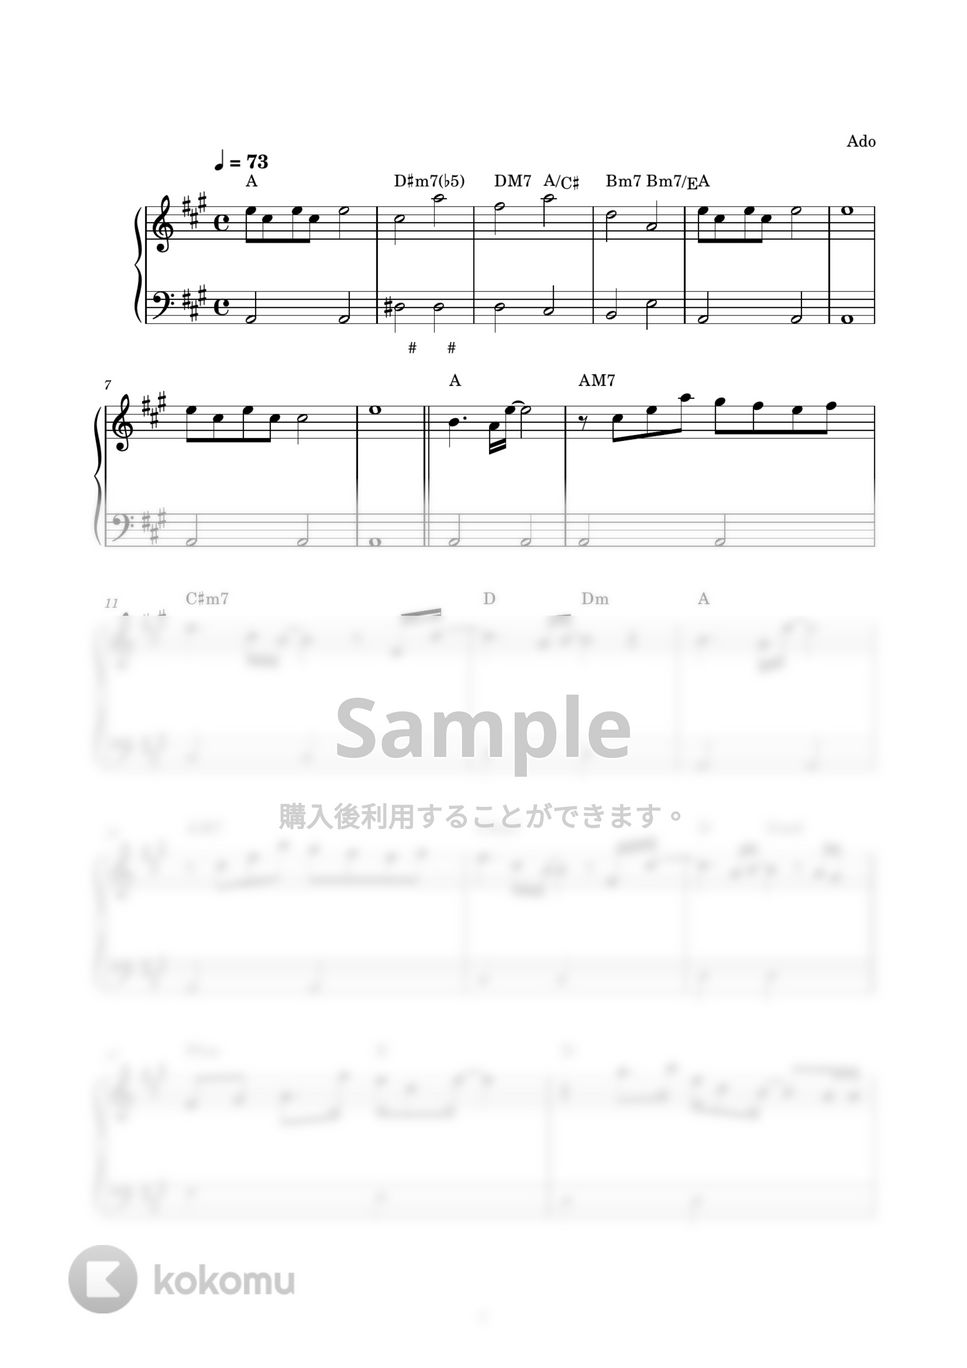 Ado - 世界のつづき (ウタ from ONE PIECE FILM RED) (ピアノ楽譜 / かんたん両手 / 歌詞付き / ドレミ付き / 初心者向き) by piano.tokyo